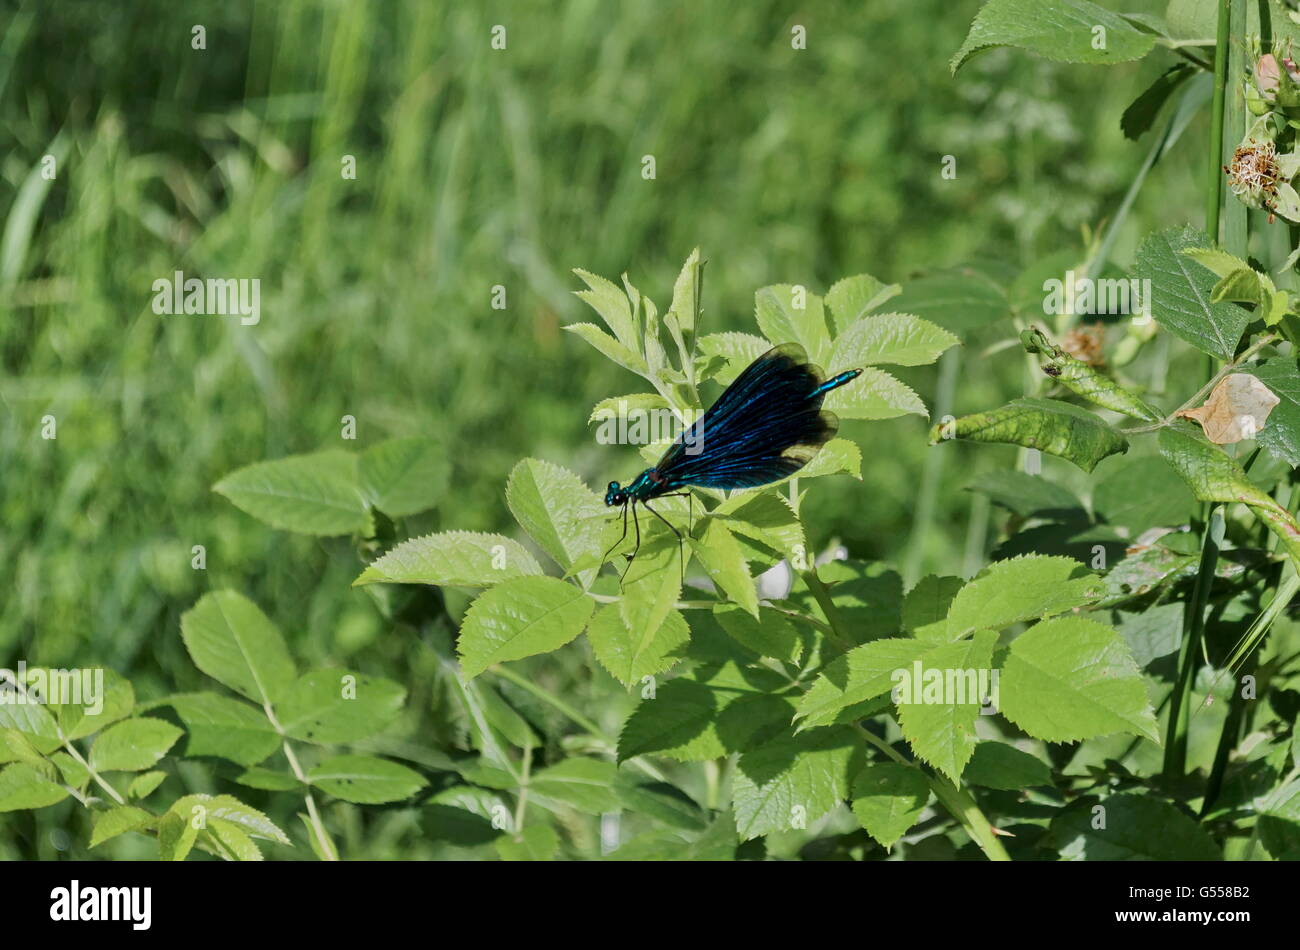 Blue odonata or dragonfly on green leaf, Sofia, Bulgaria Stock Photo